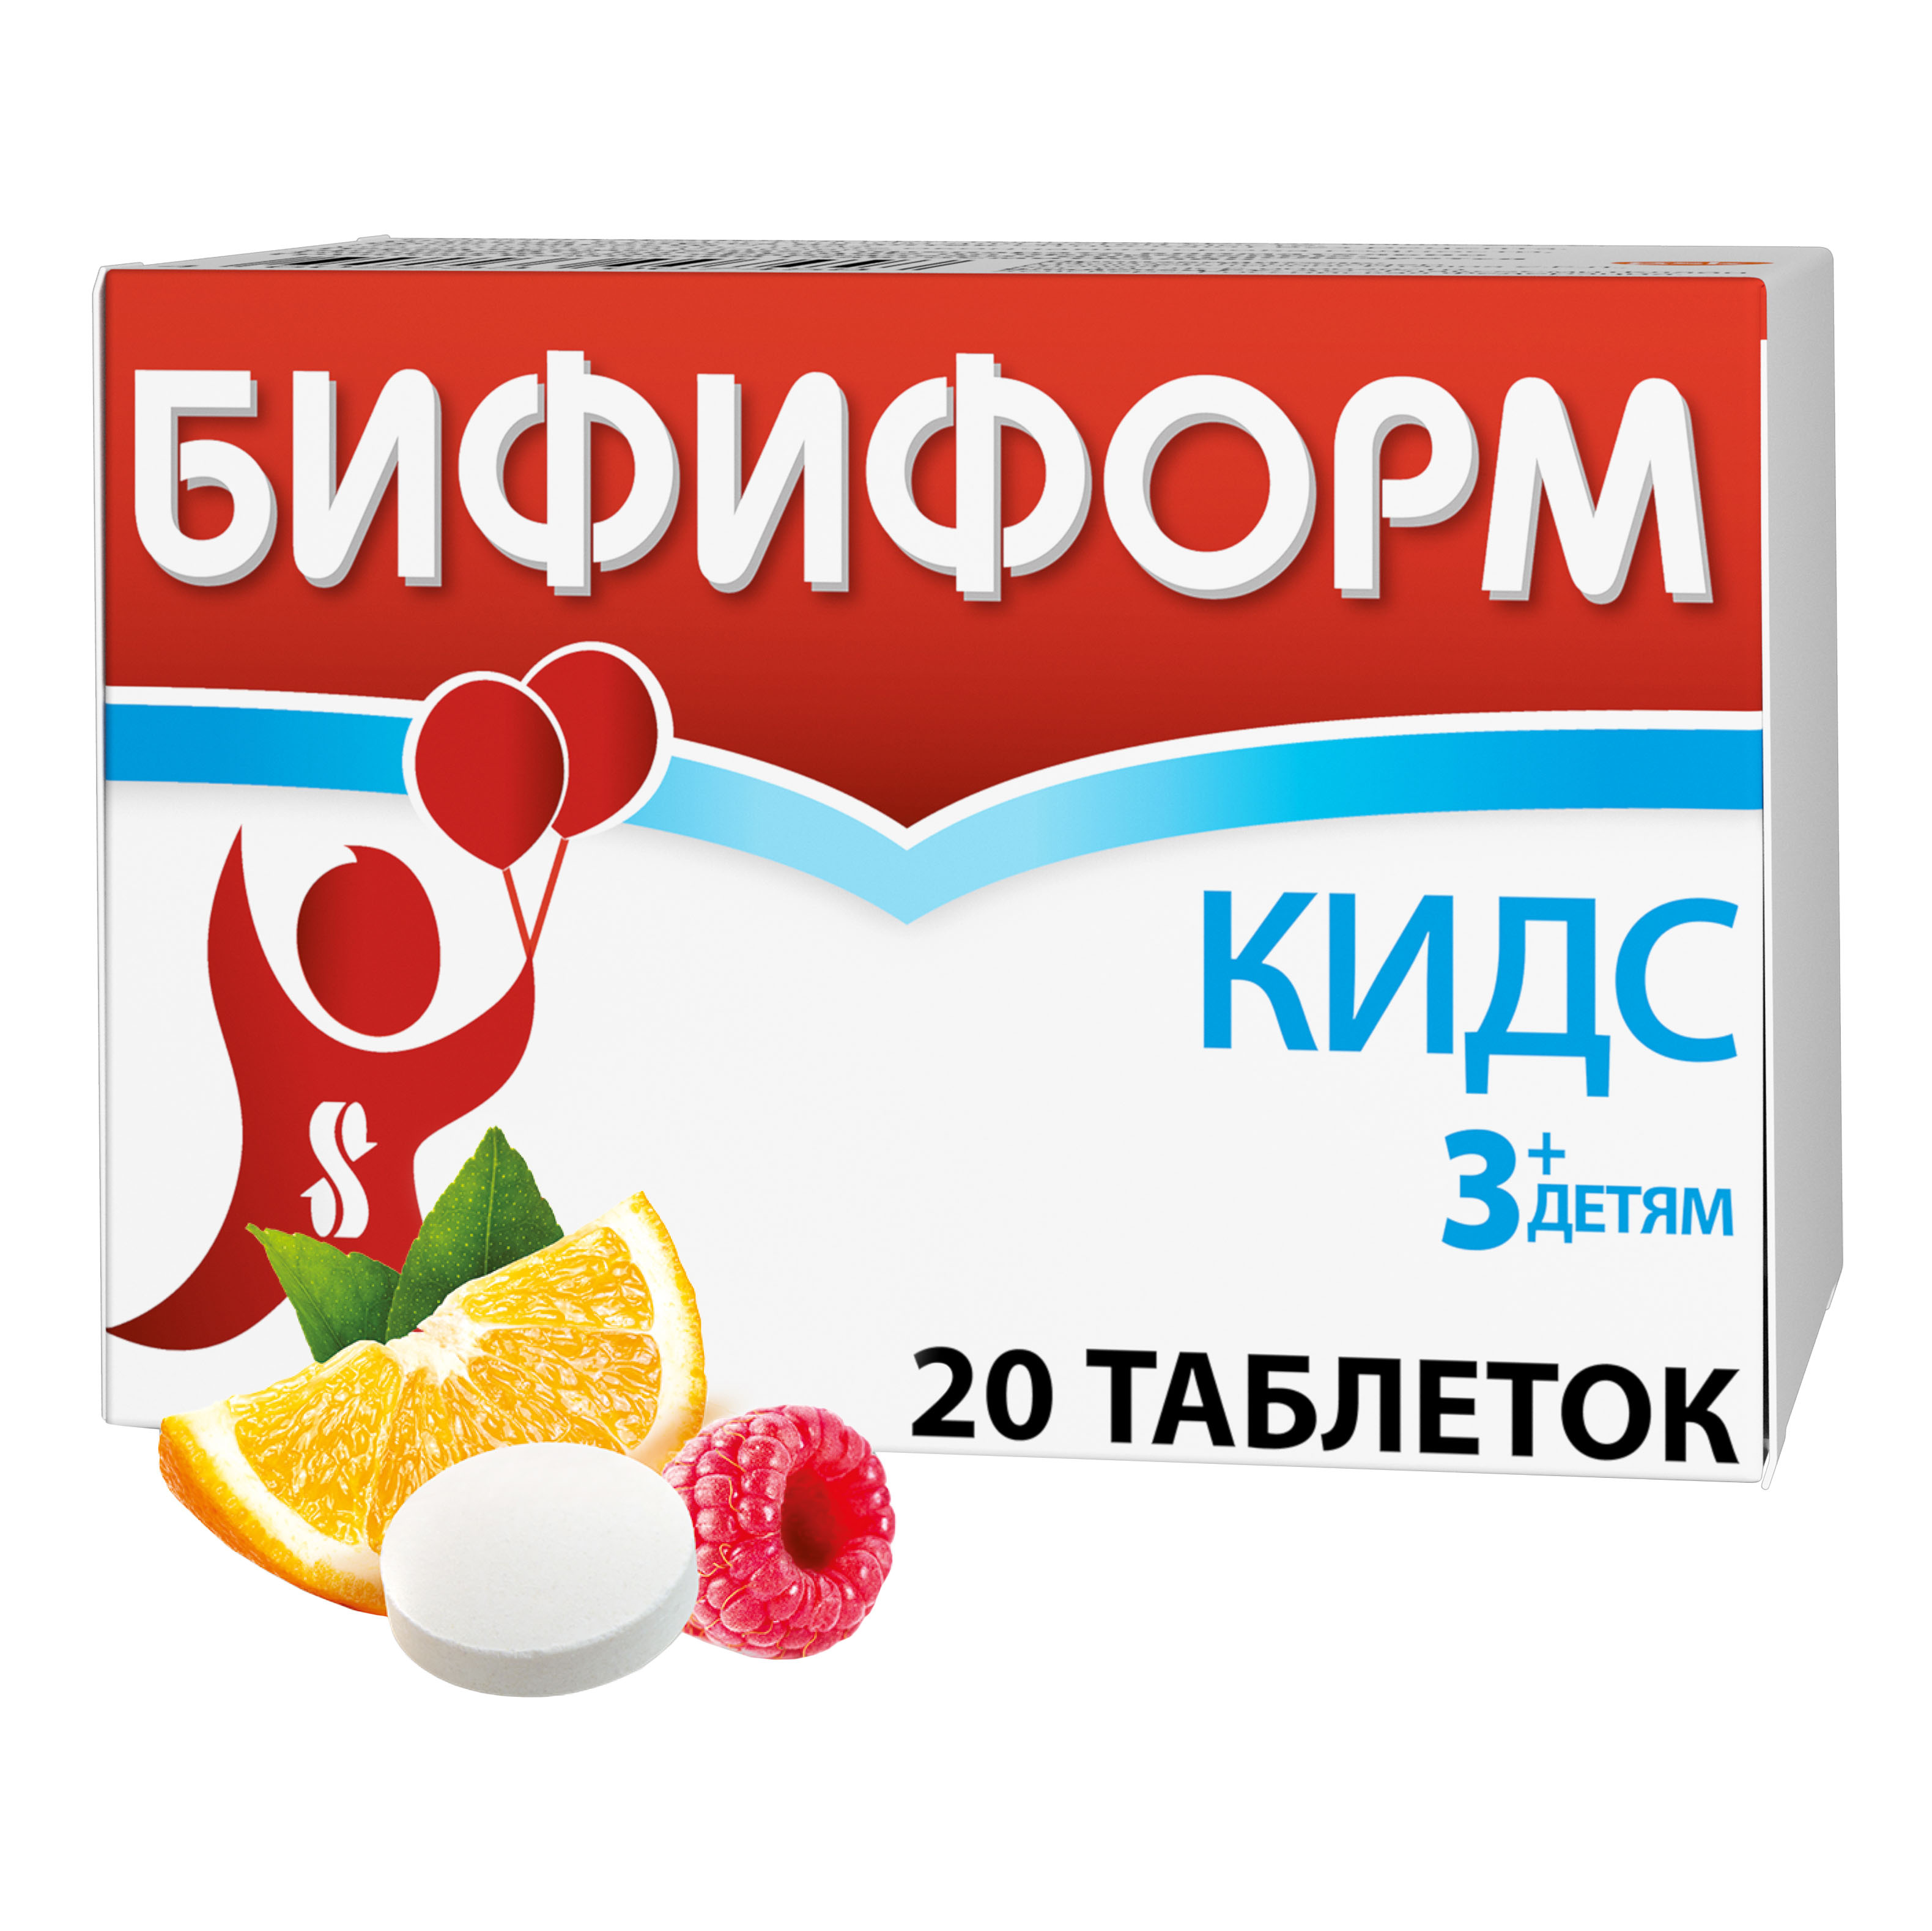 Бифиформ Кидс пробиотик для нормализации микрофлоры кишечника и поддержания иммунитета с 3 лет, 20 шт. бифиформ кидс таблетки 625 мг апельсин малина 20 шт